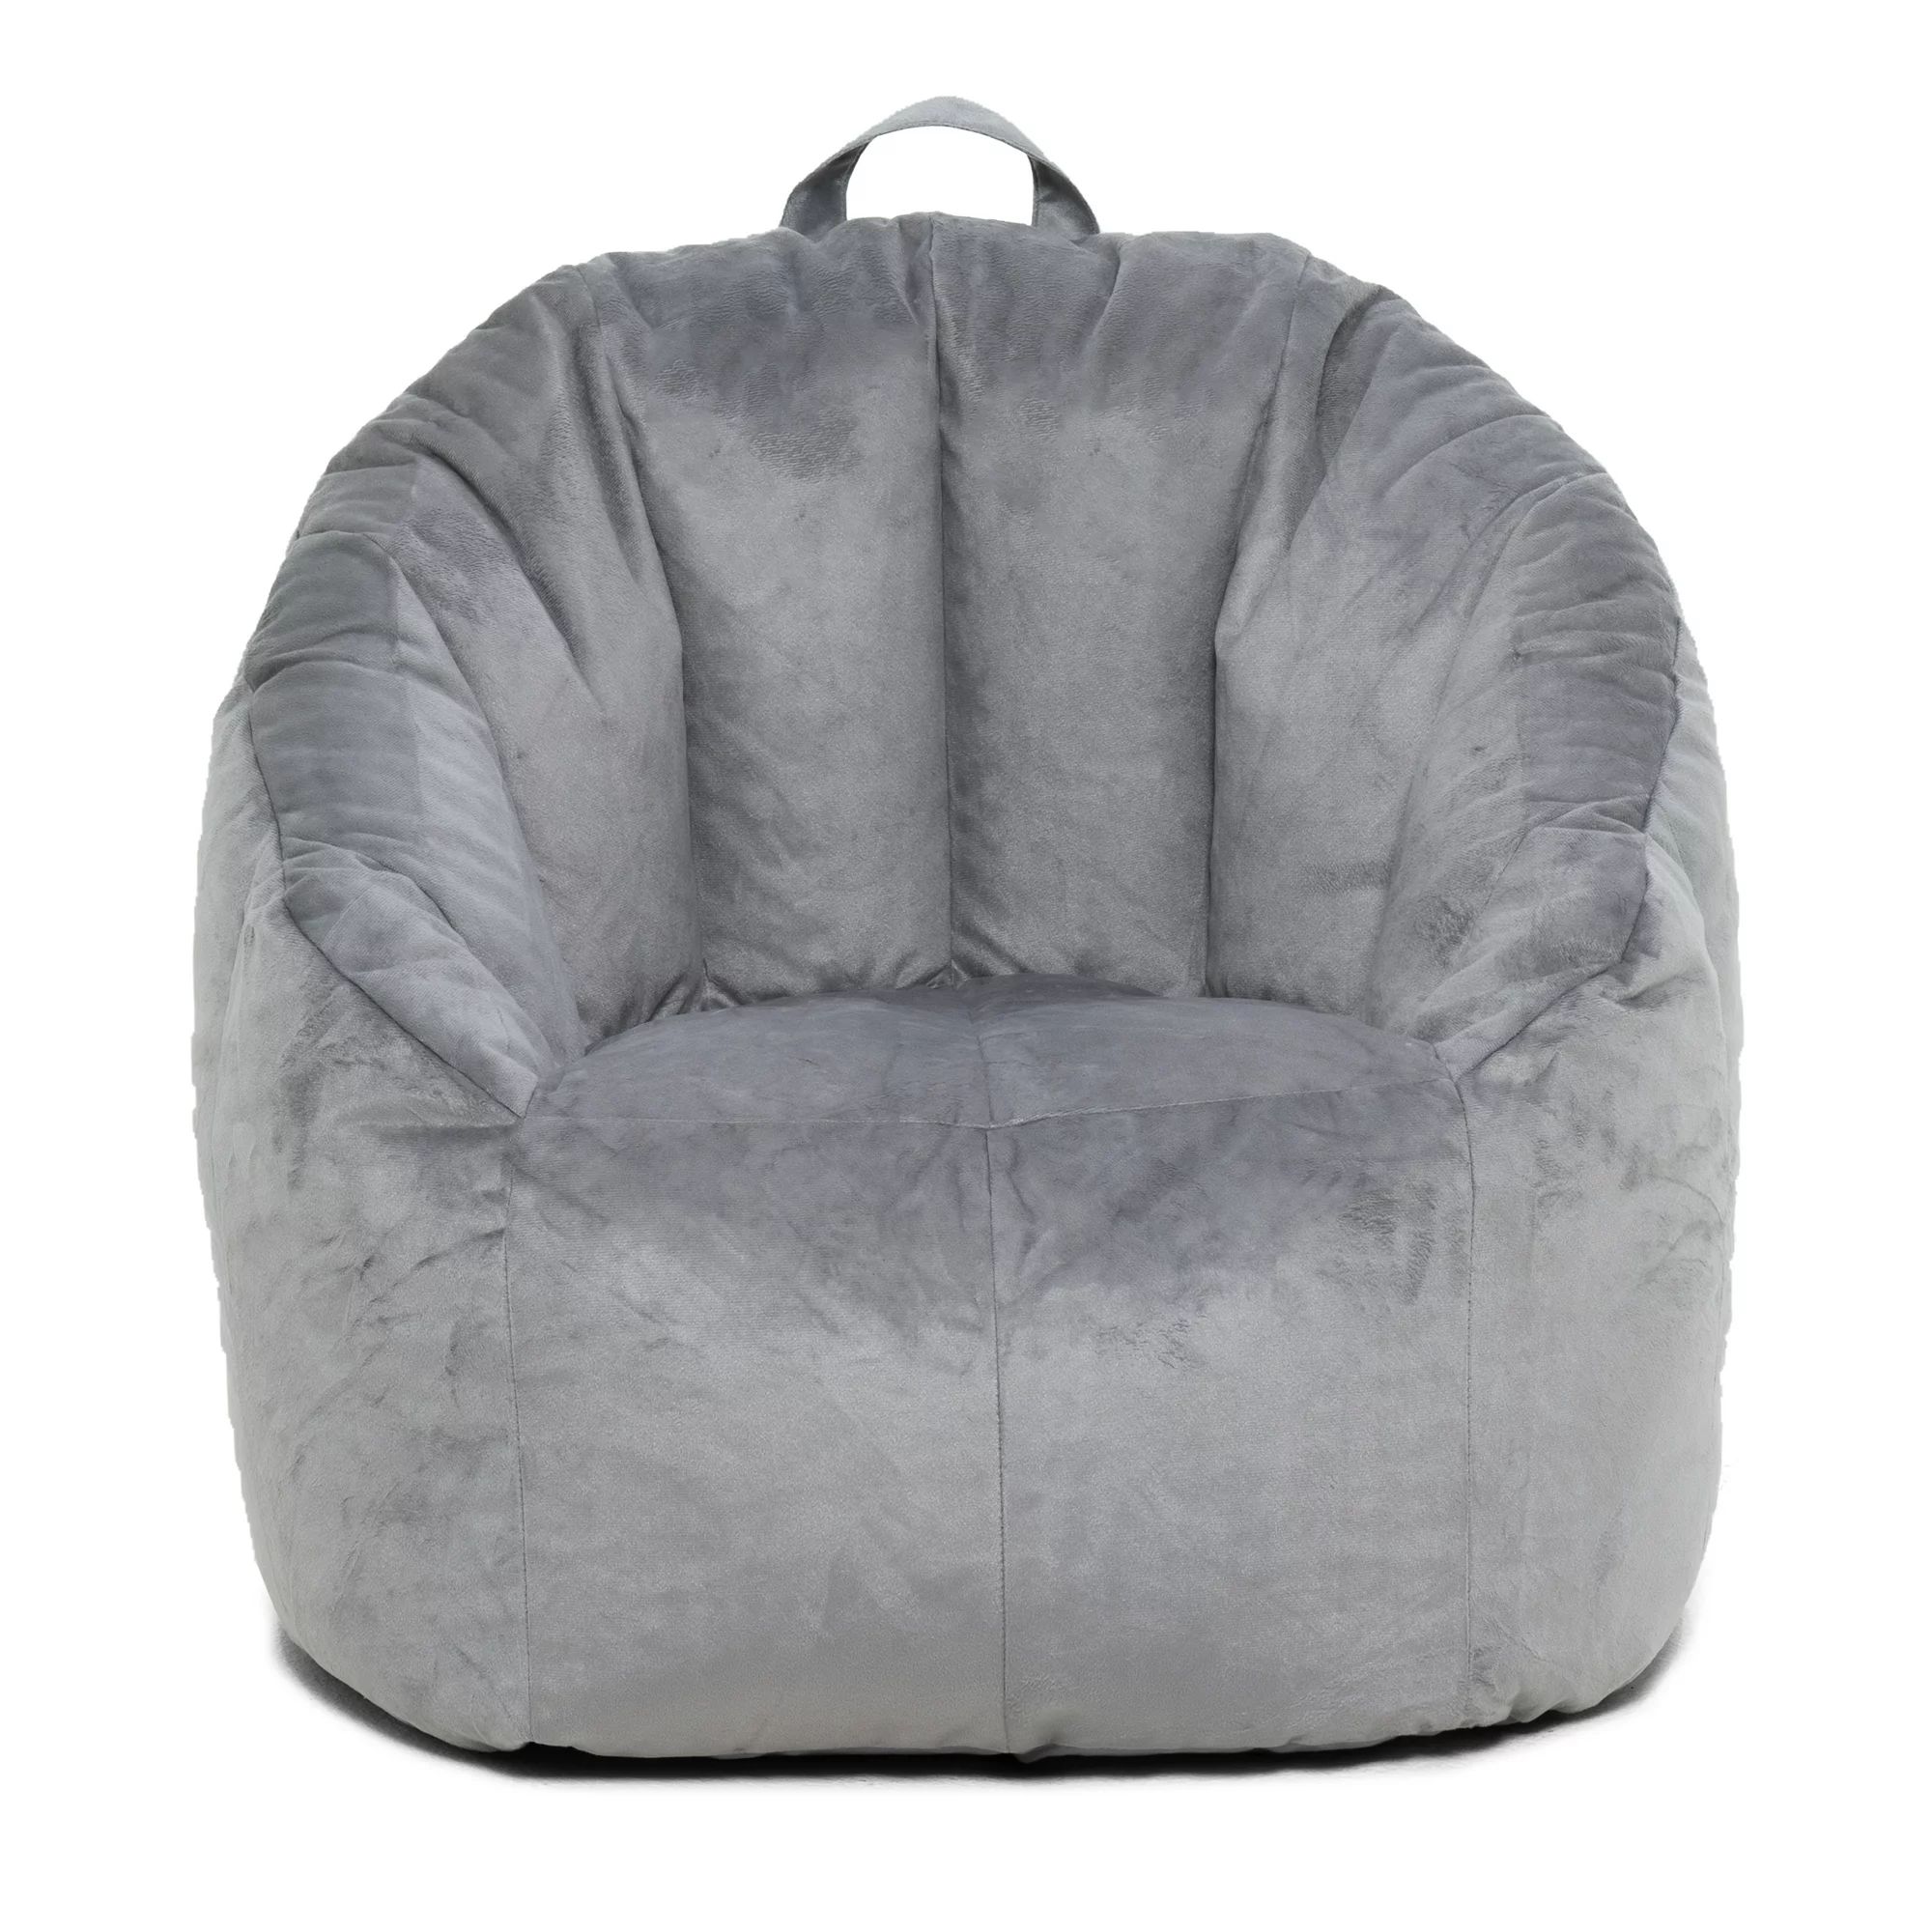 Big Joe Joey Bean Bag Chair, Gray Plush Fabric | Walmart (US)